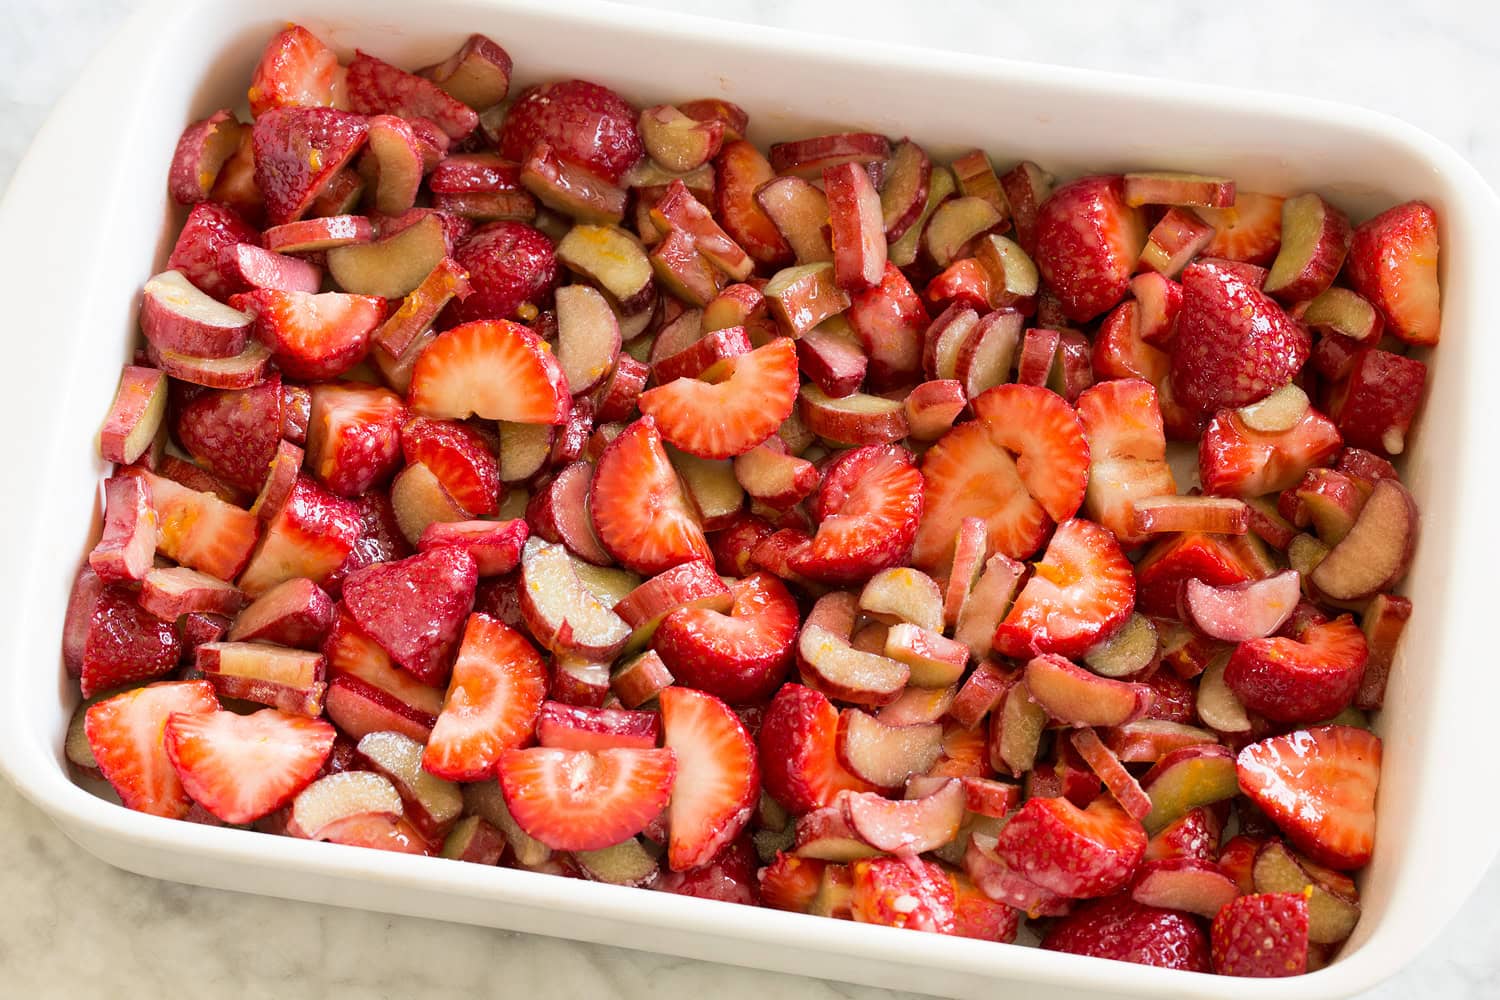 Strawberry rhubarb mixture in baking dish.